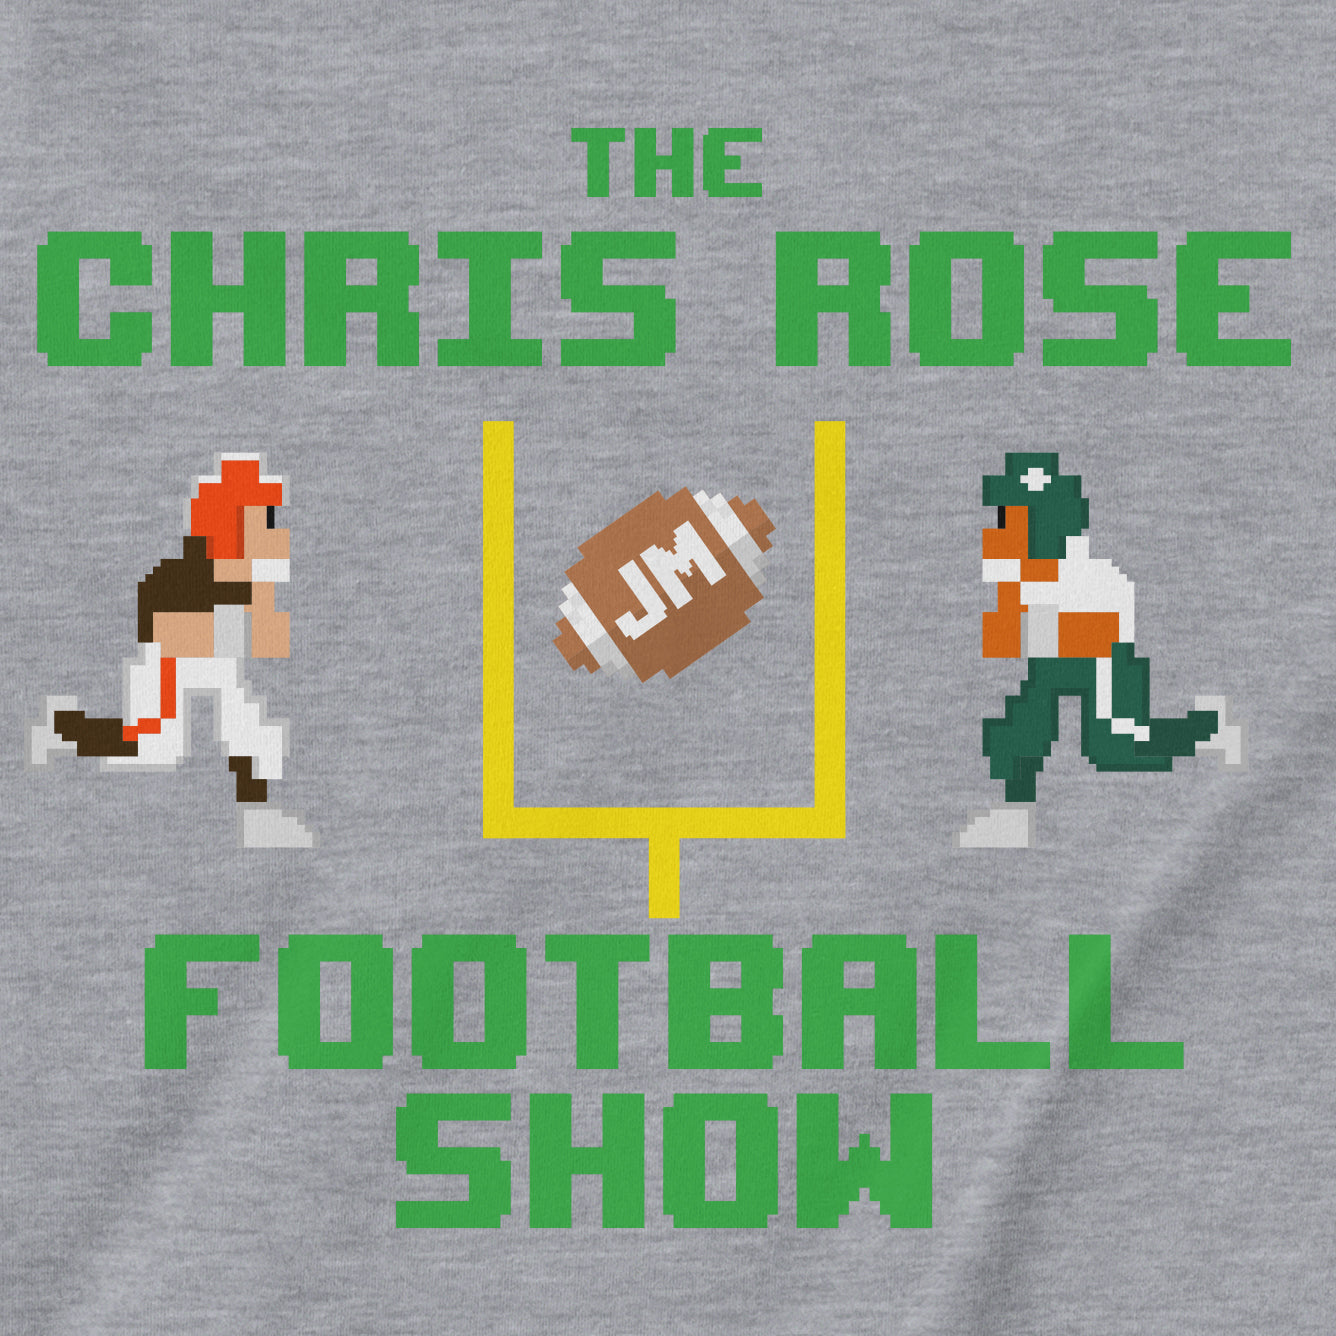 The Chris Rose Football Show | Head to Head T-Shirt